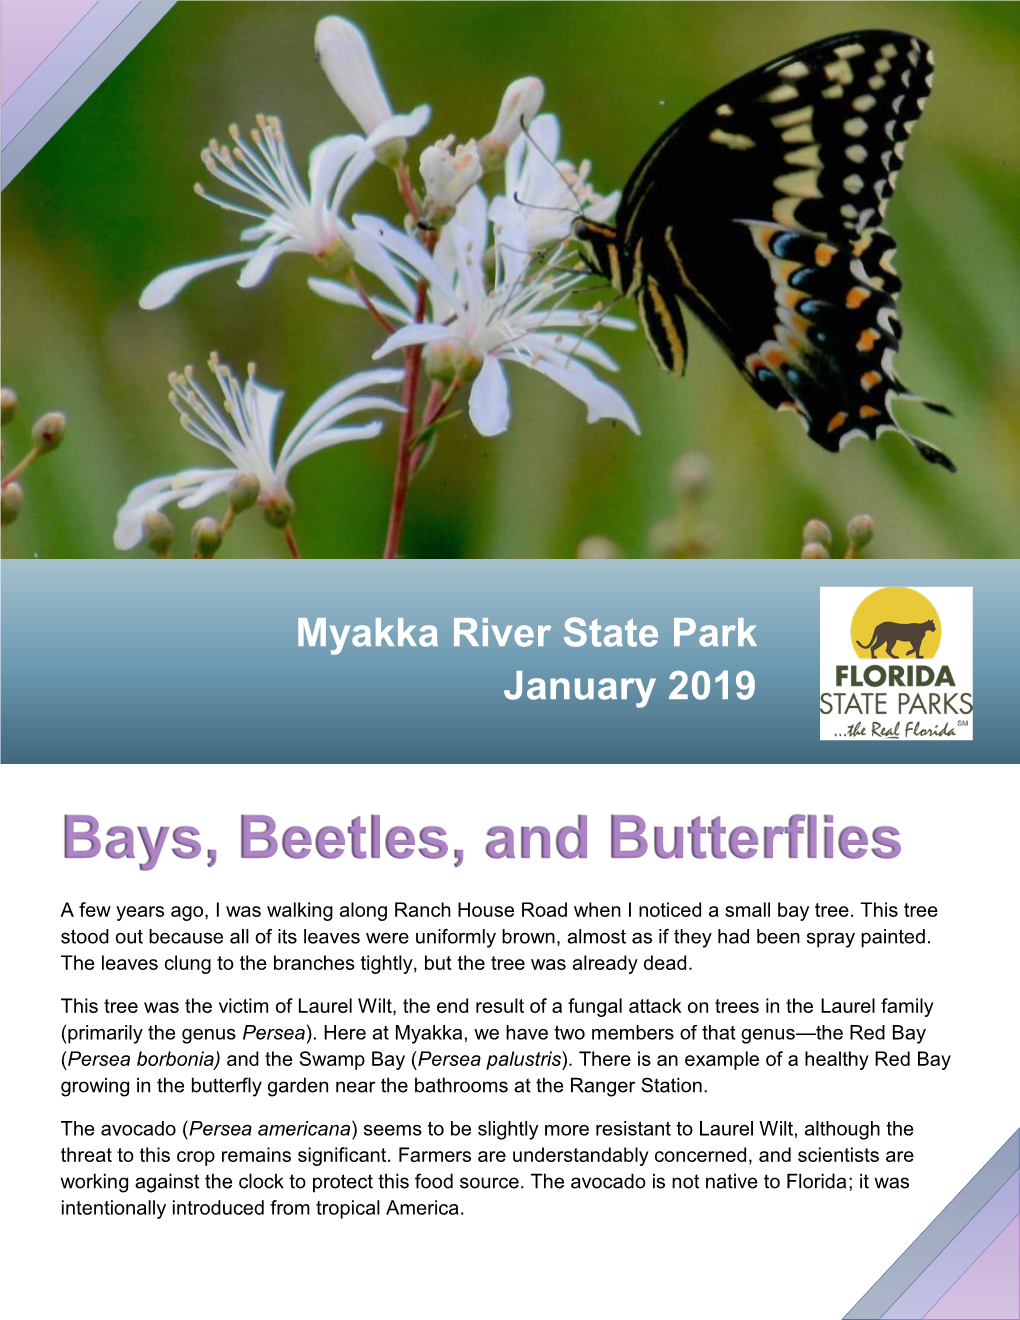 Bays, Beetles, and Butterflies